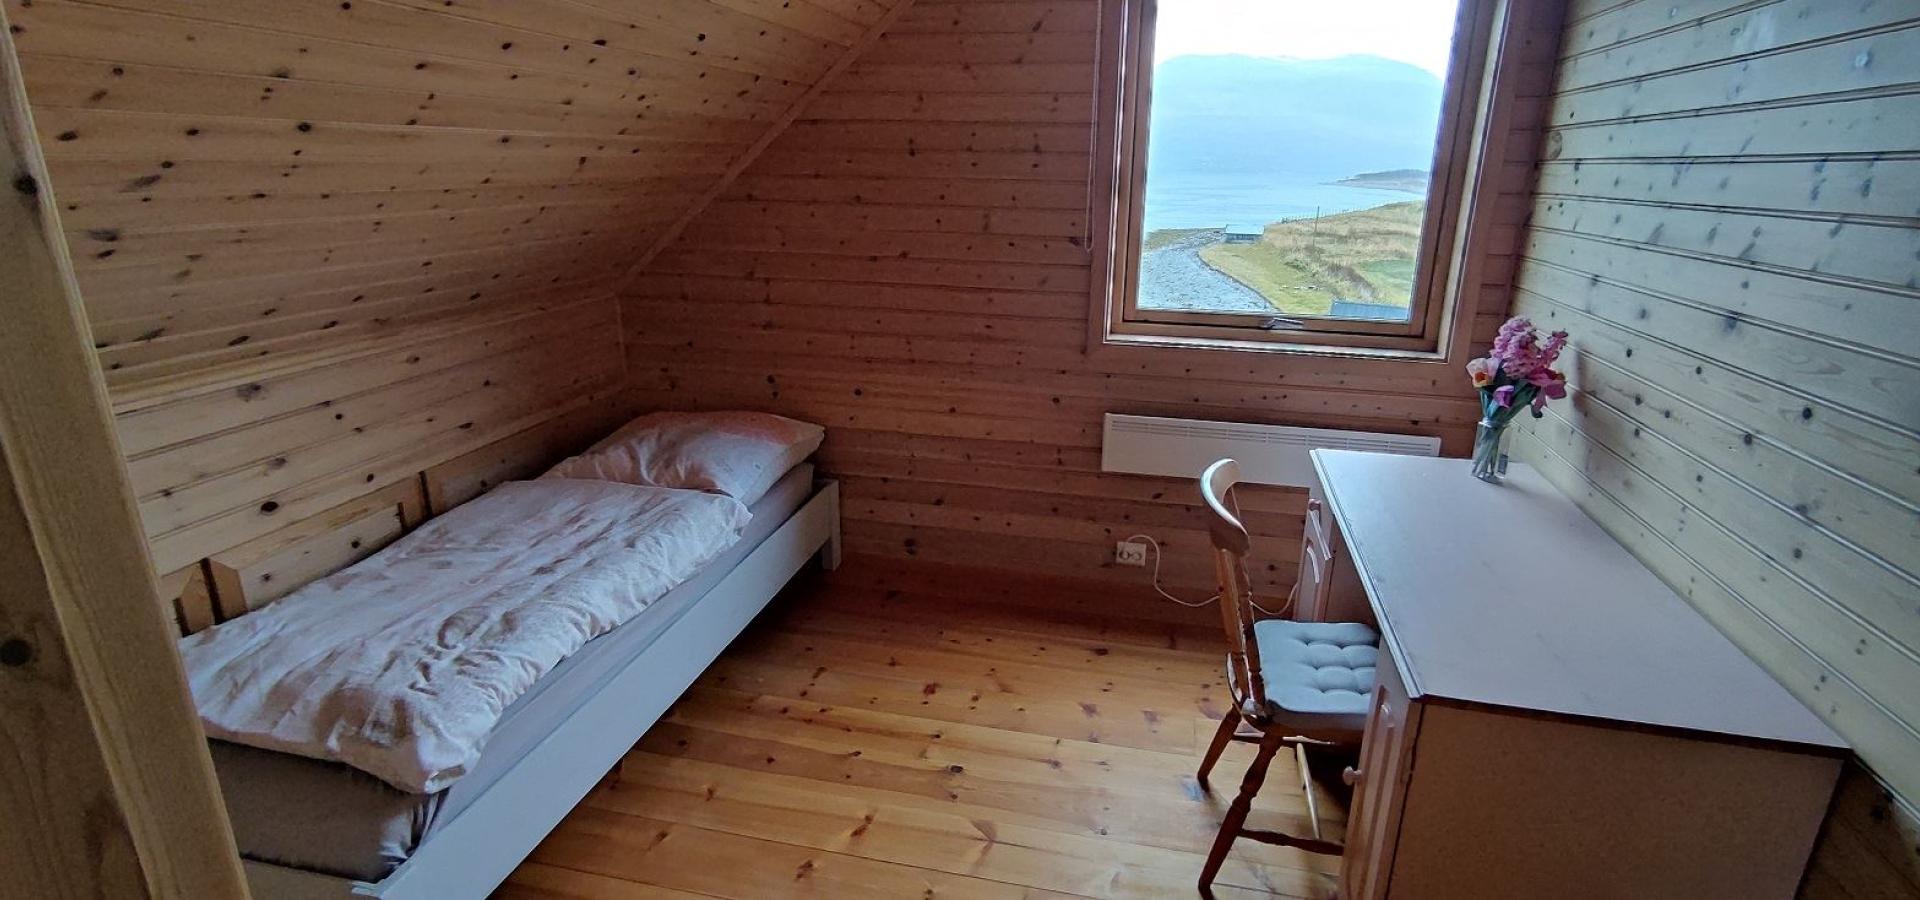 Bed & Breakfast - Overnatting i huset ved fjorden - Go through Norge